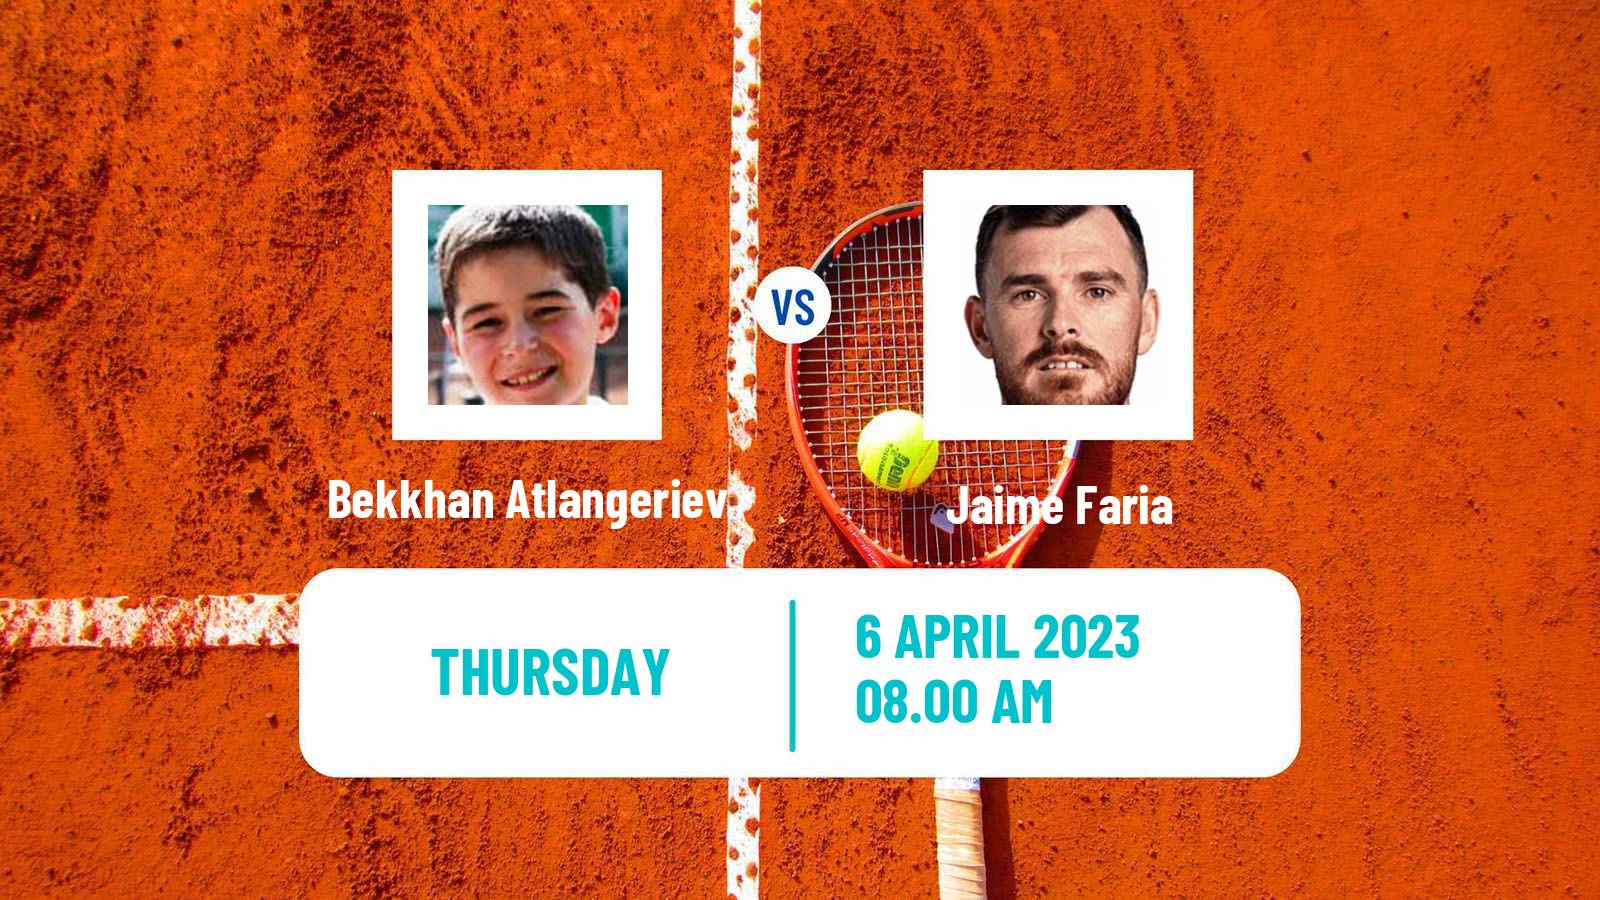 Tennis ITF Tournaments Bekkhan Atlangeriev - Jaime Faria